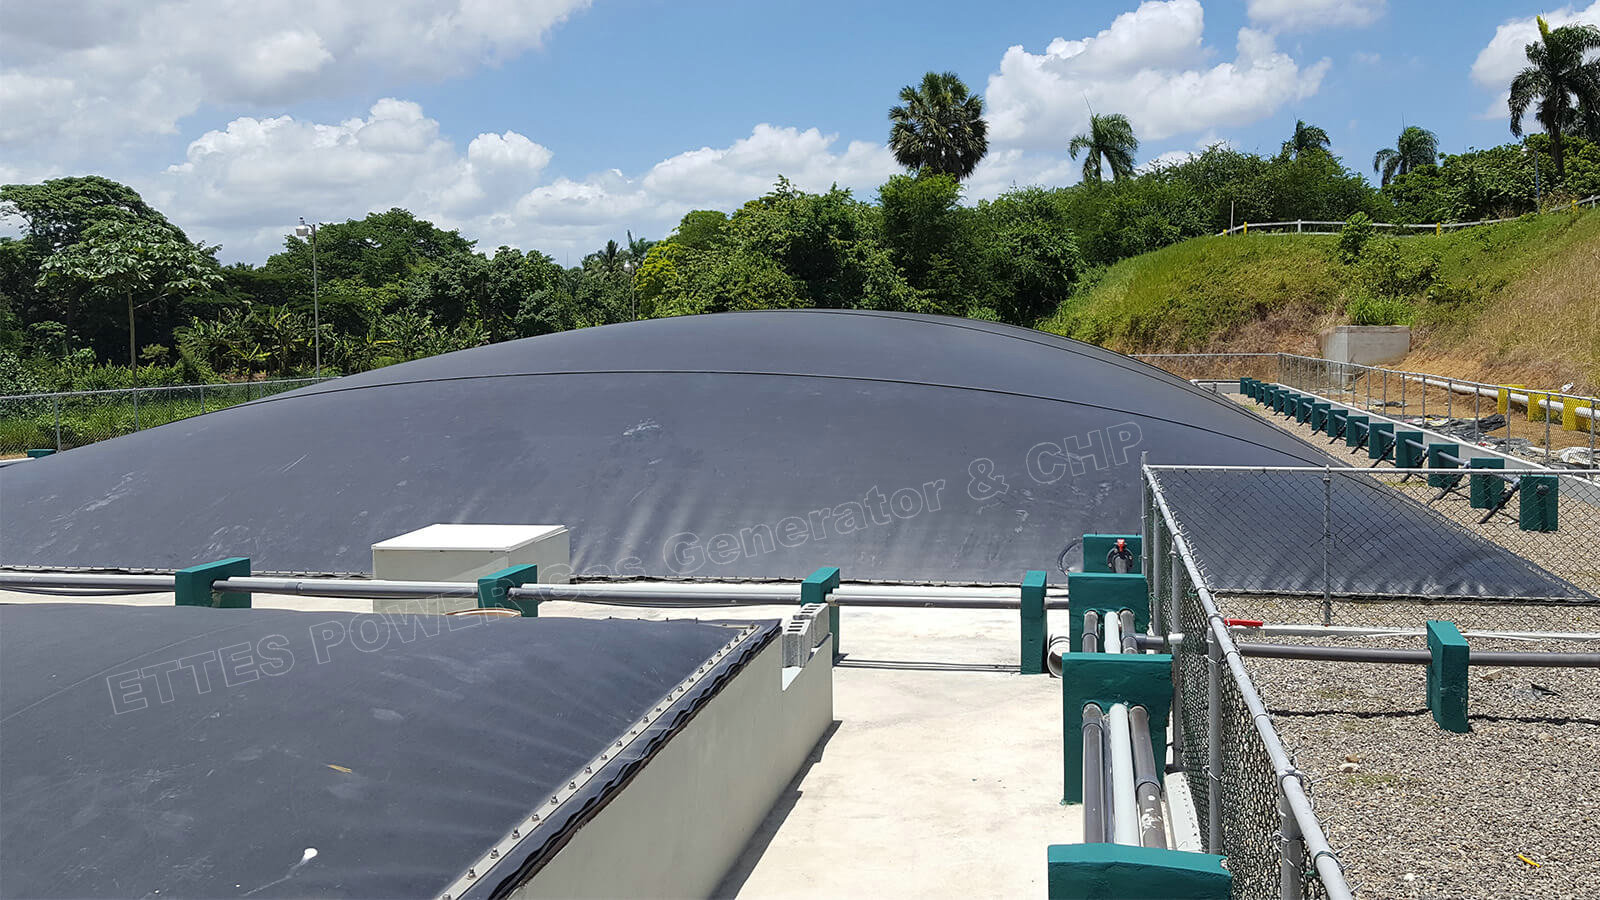 Farm digester provide biogas for MAN gas generators & CHP system-ETTES POWER